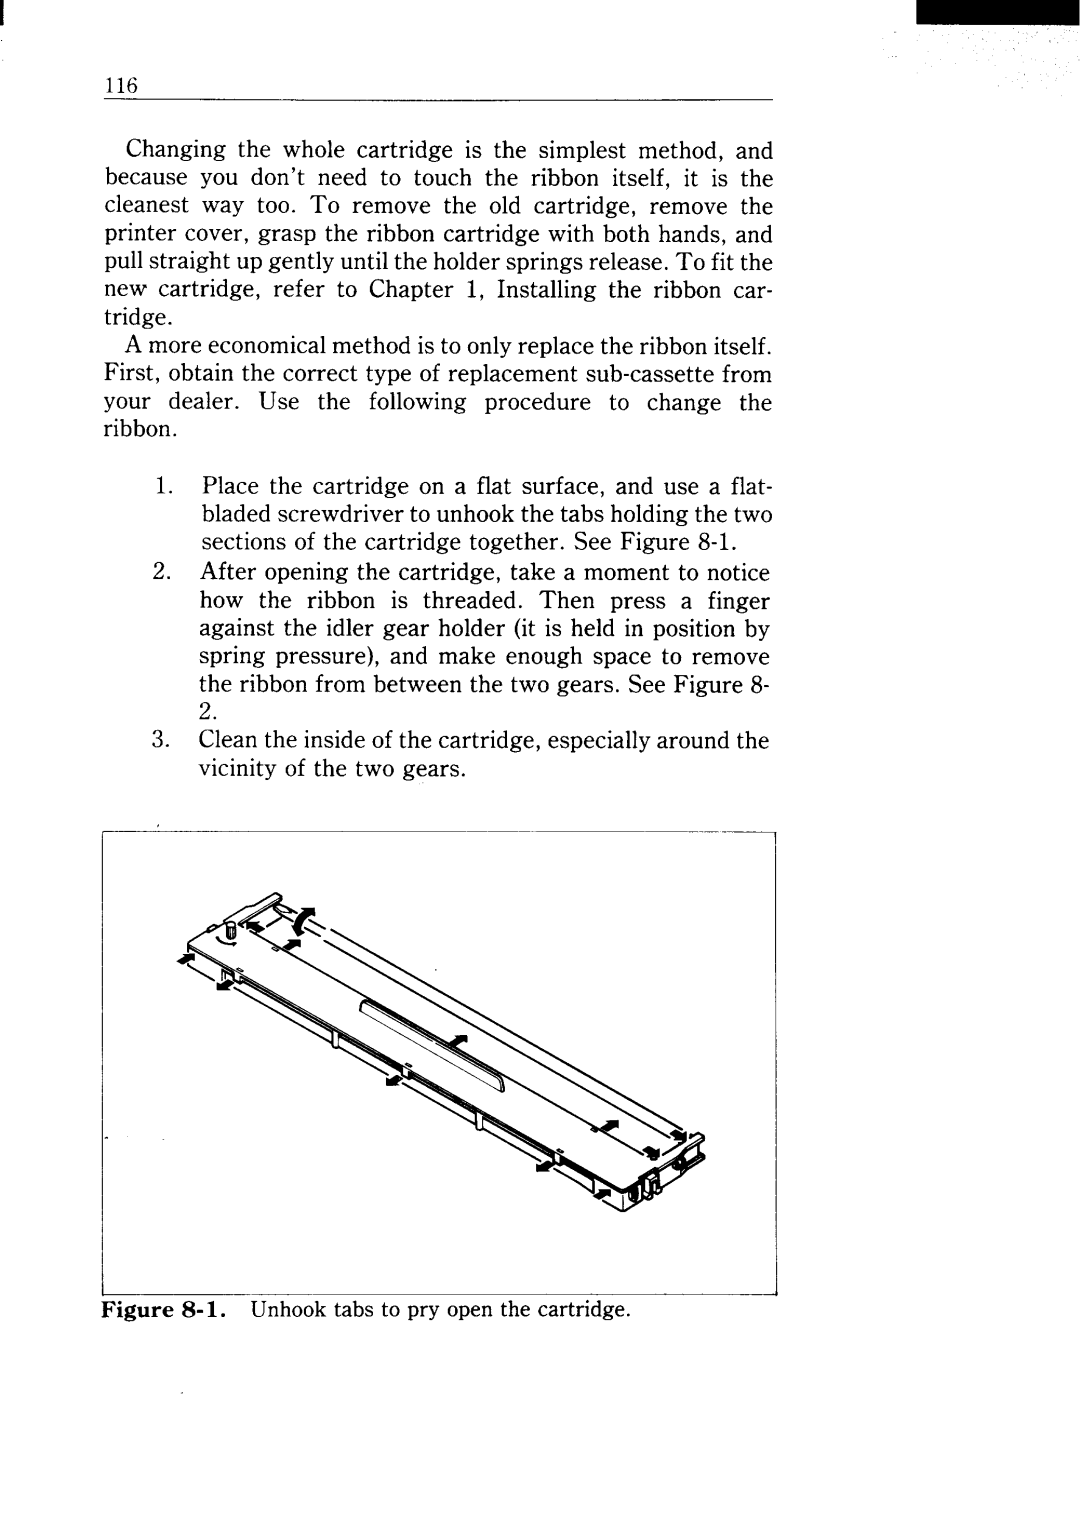 Star Micronics NX-15 user manual ‘igure 8-1. Unhooktabs to pry open the cartridge 